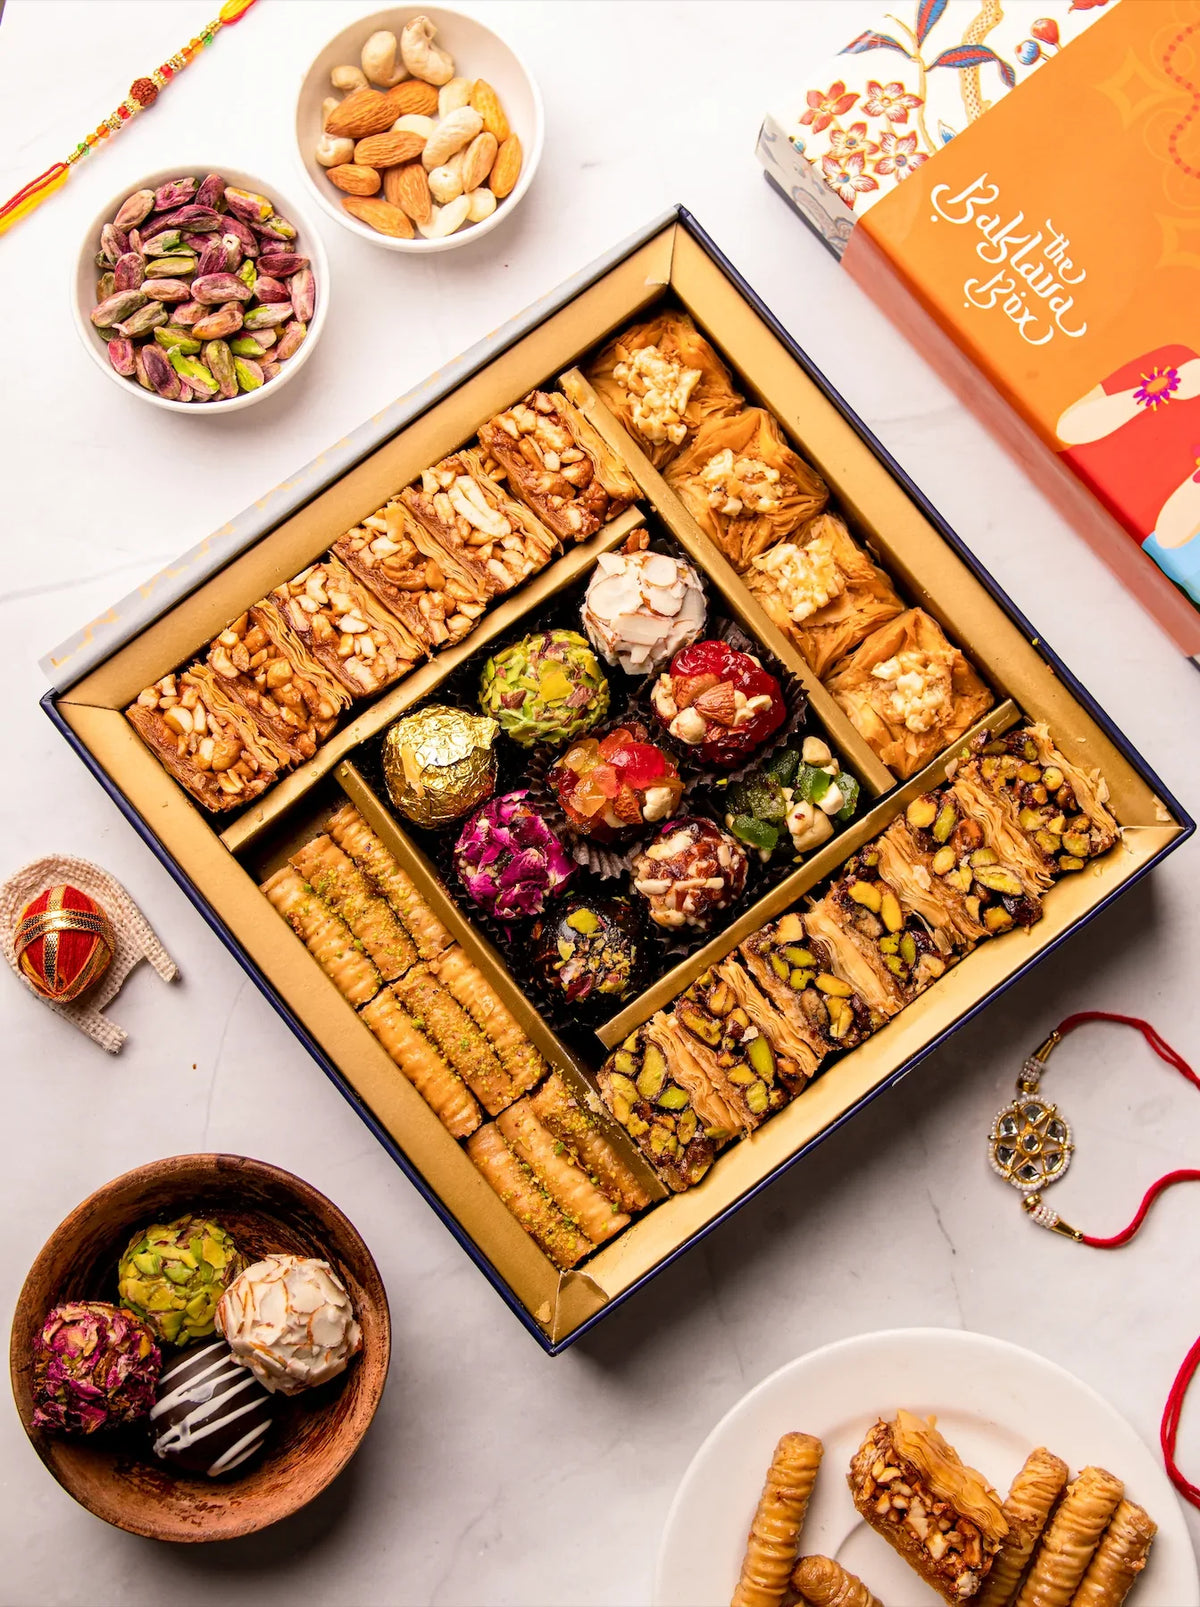 ANAND Royal Assorted Sweets Festive Gift Pack, Authentic Pure Ghee Indian  Mithai Box, Kaju Katli, Coconut Burfi, Baklava, Soan Papdi, Aam Papad |  Wedding, Diwali, Rakhi Gift Pack (375g) : Amazon.in: Grocery